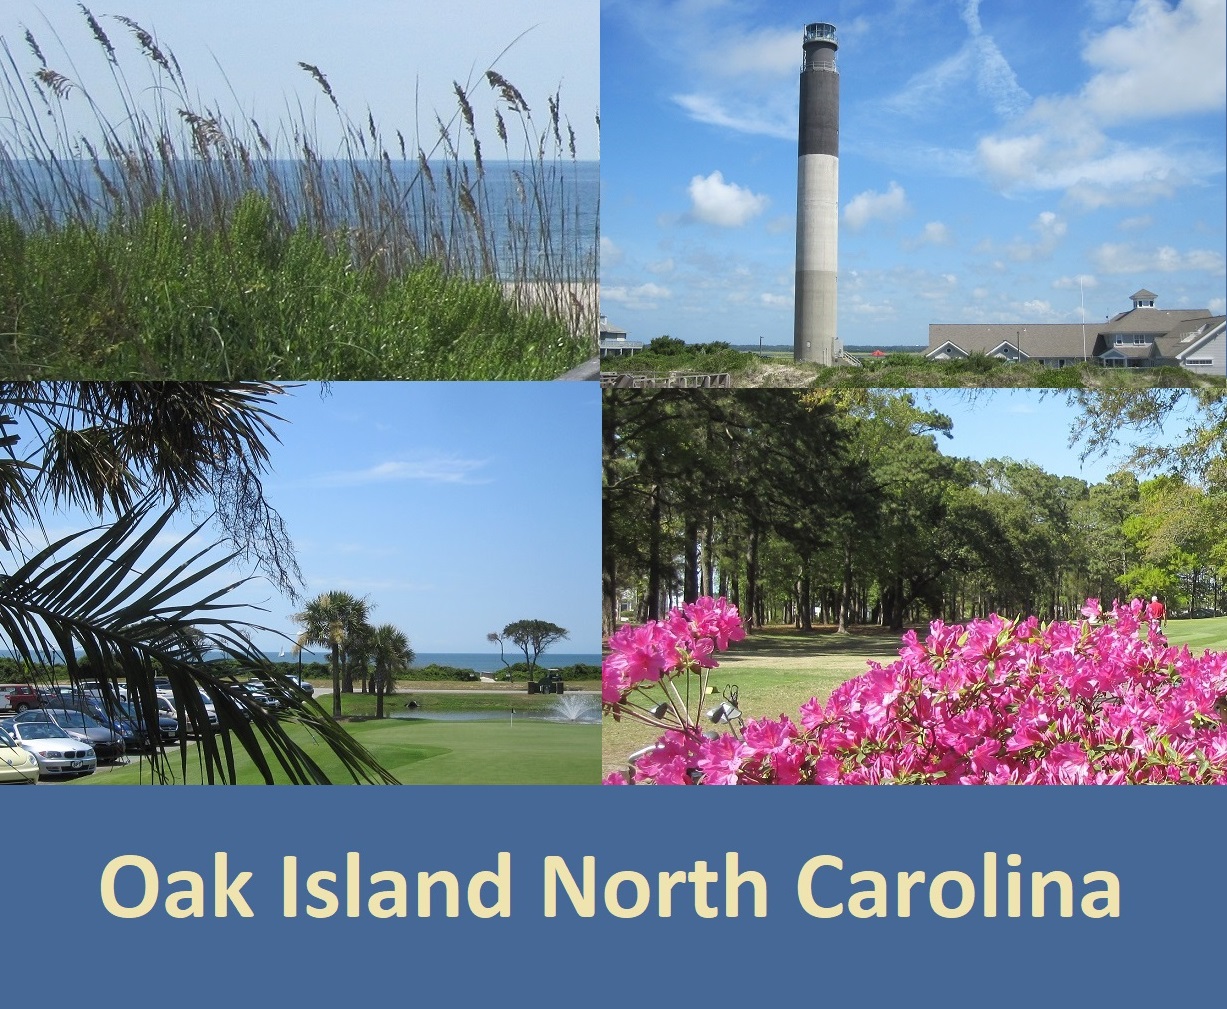 Oak Island North Carolina pictures